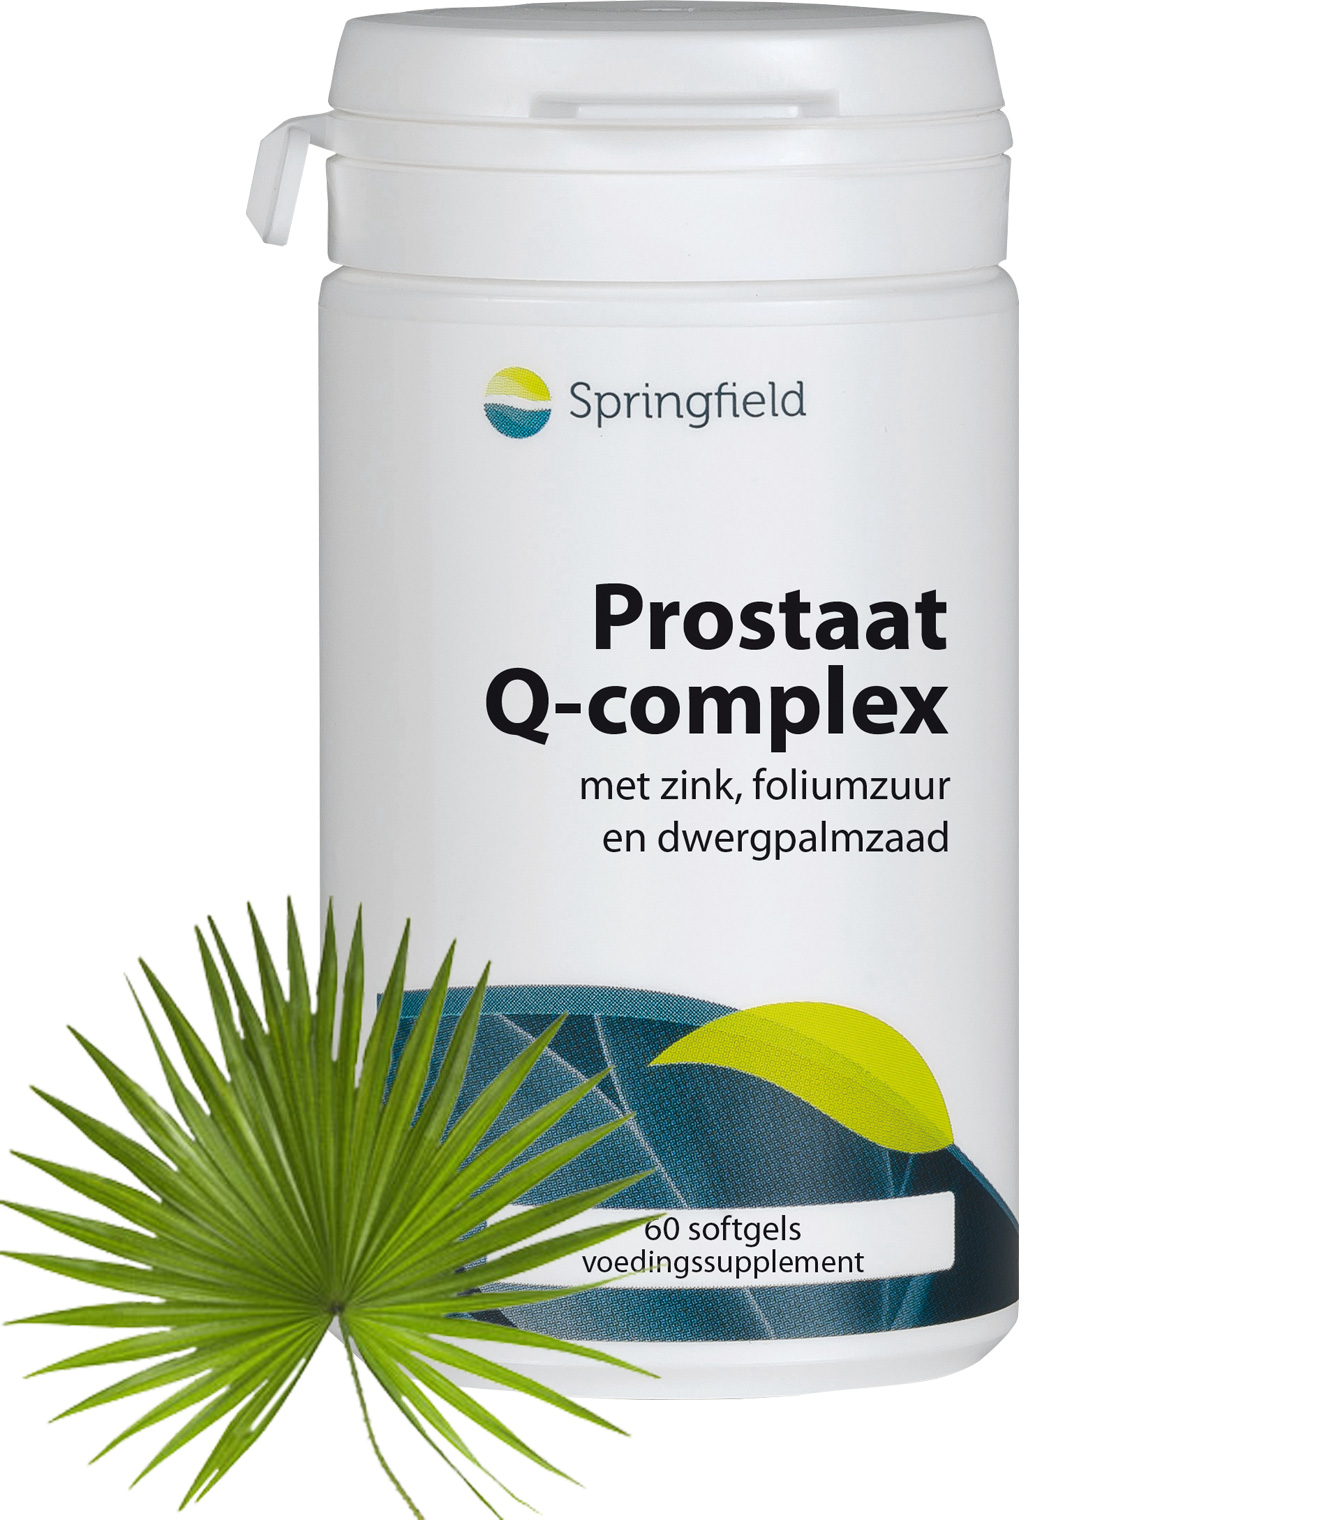 Prostaat Q-complex - Serenoa repens (zaagbladpalm) met zink, foliumzuur en dwergpalmzaad